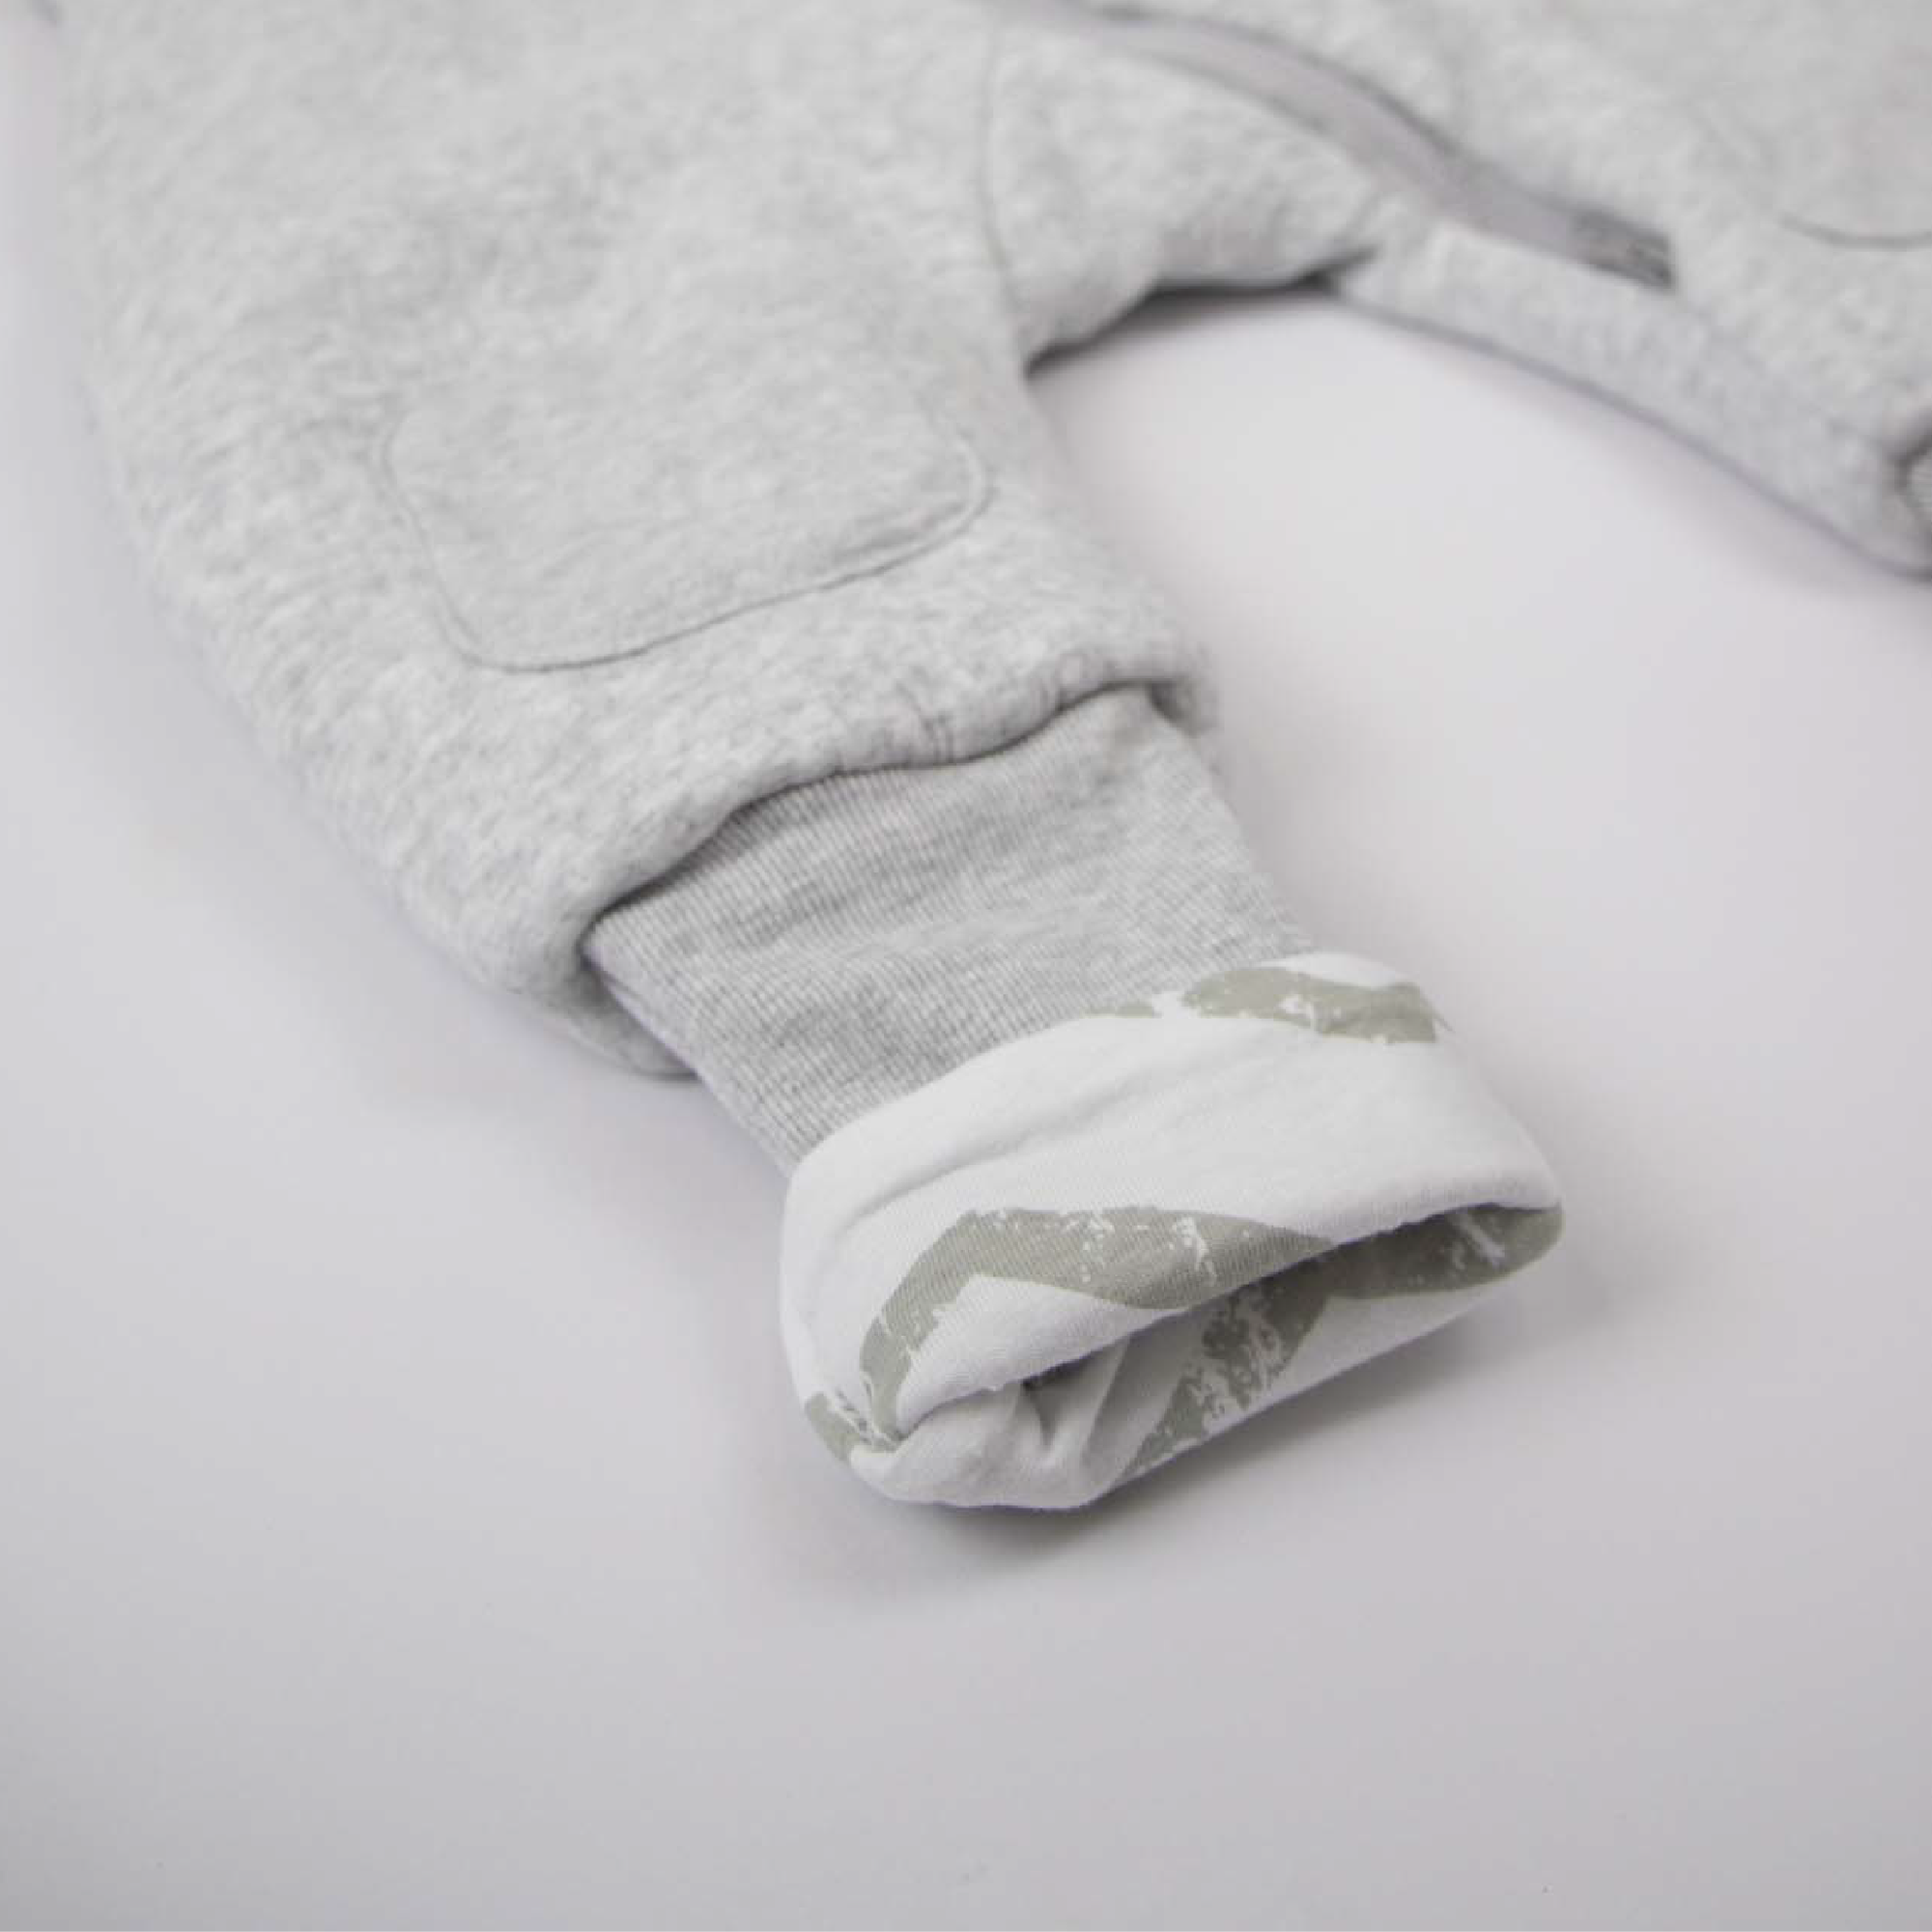 Grey Marle Winter Warmies 3.0TOG (12-24 Months) | babystudio